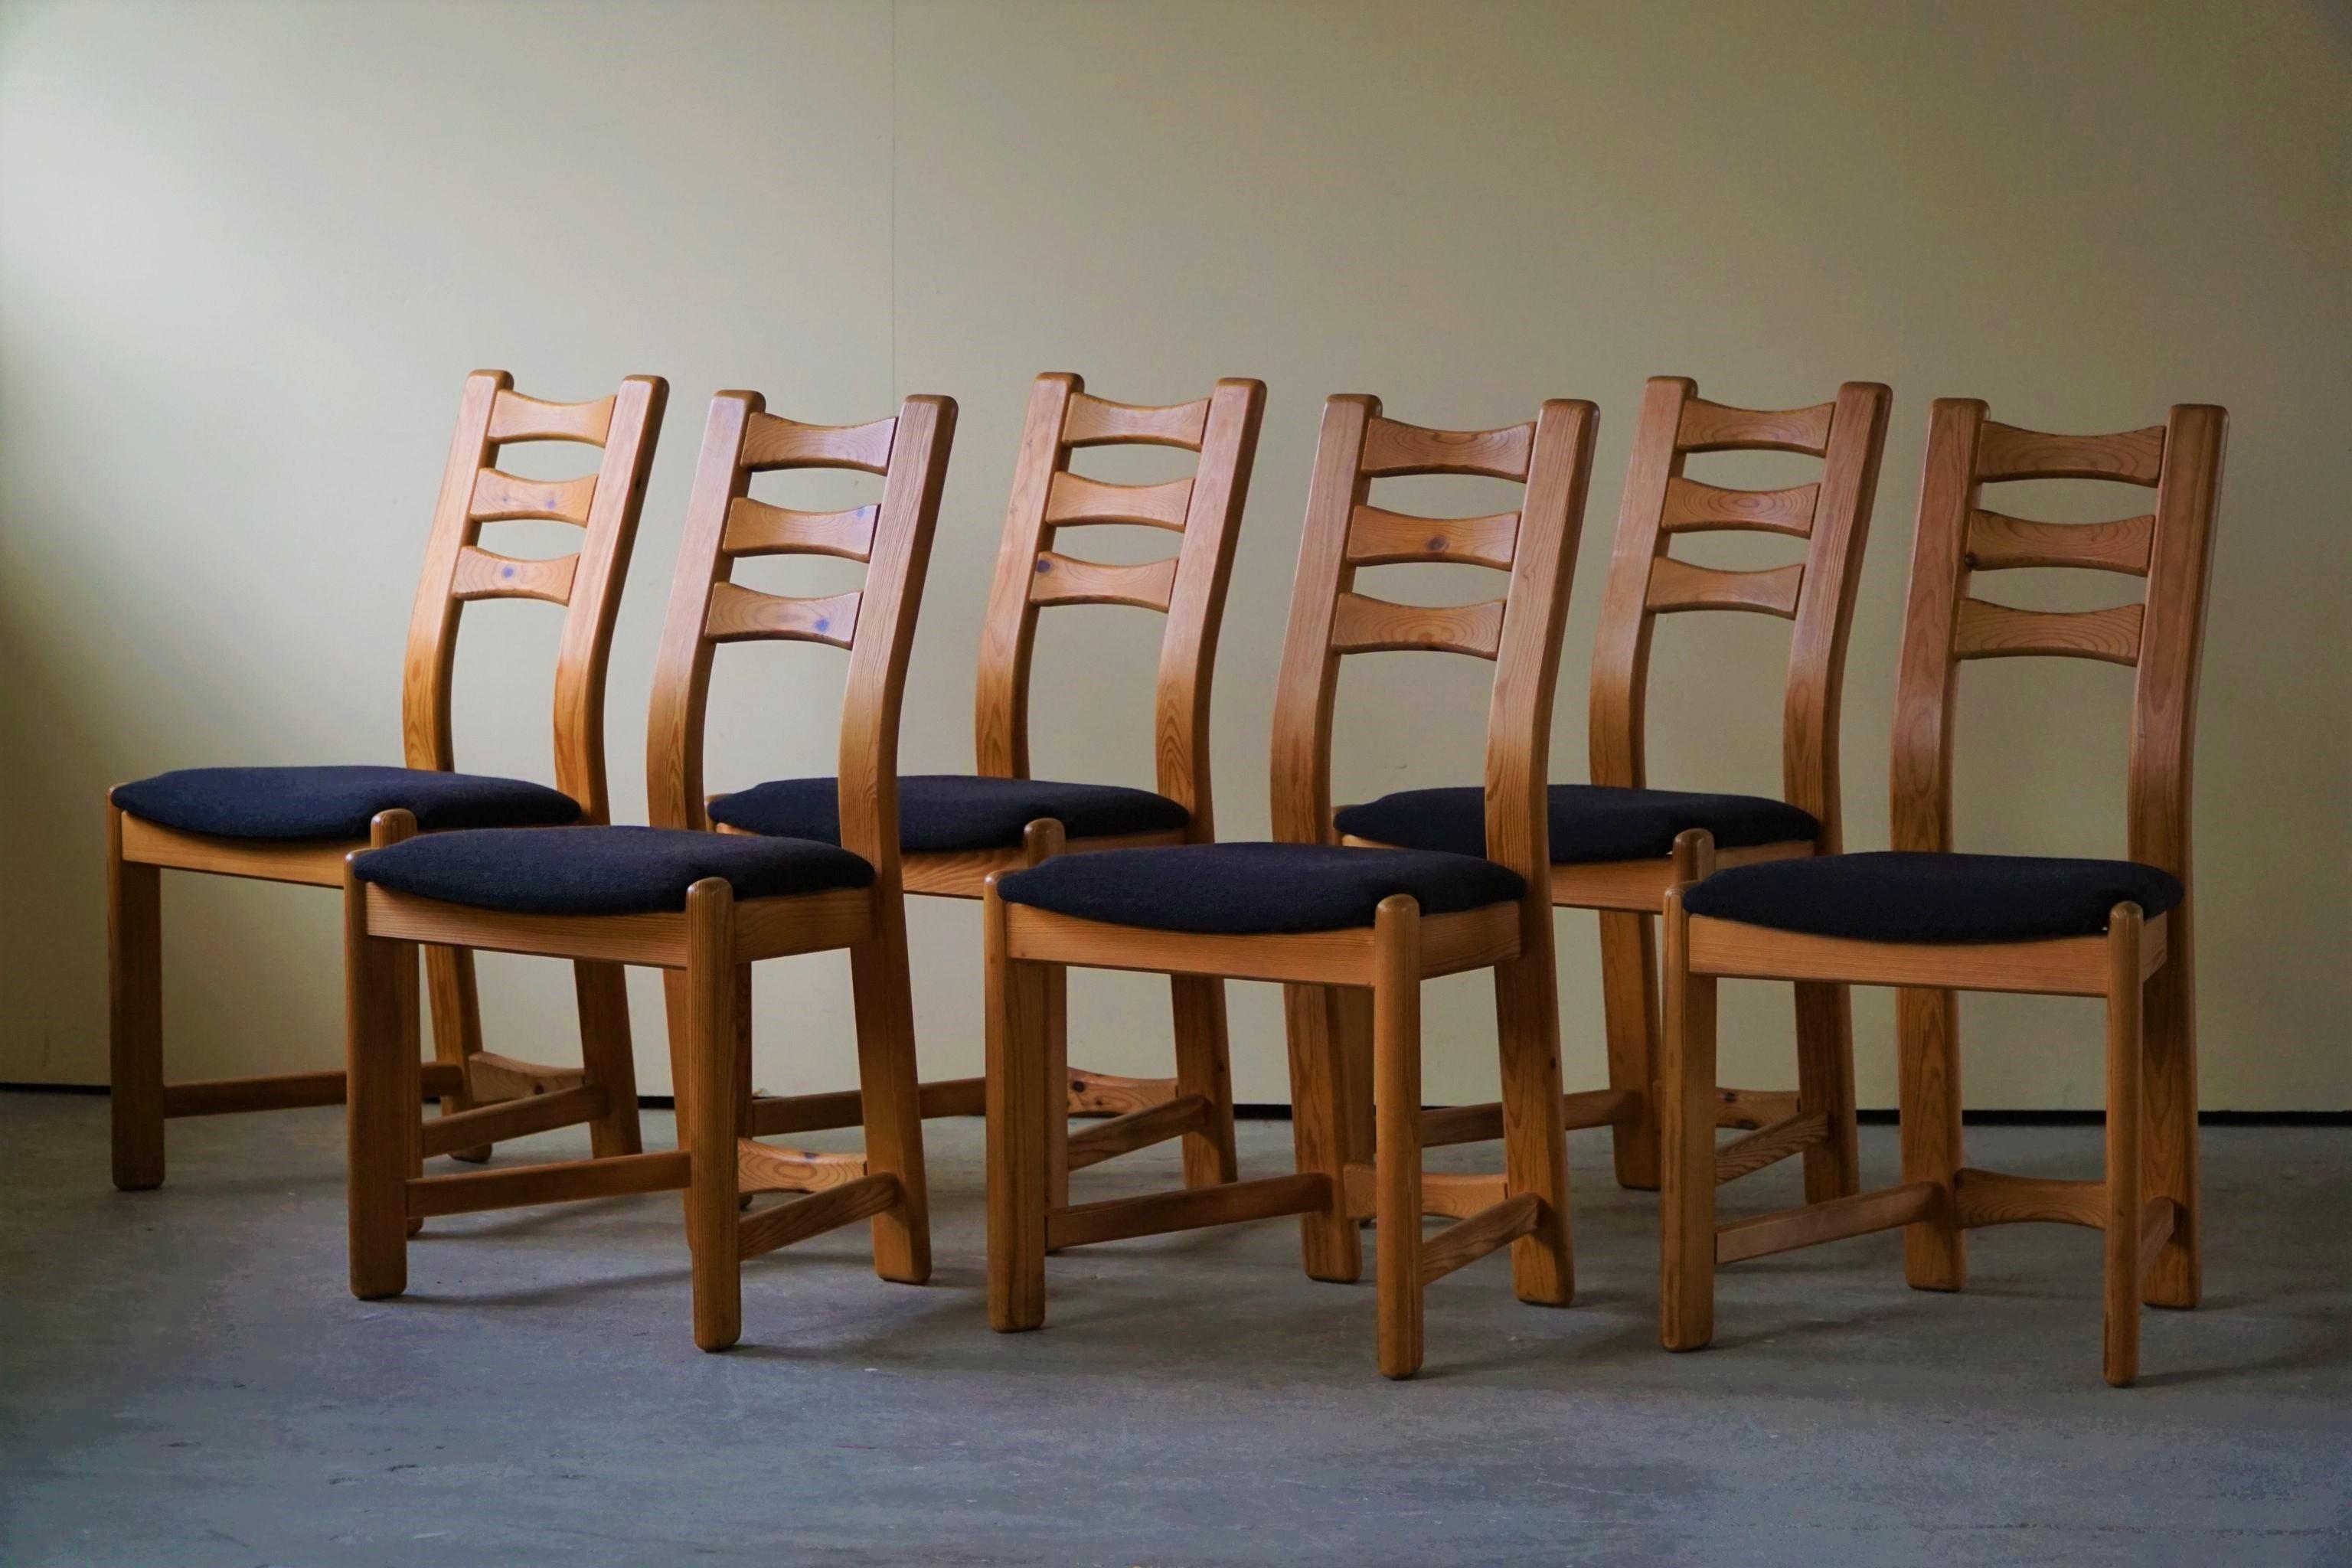 Scandinavian Modern Set of 6 Brutalist Chairs in Pine & Wool, Reupholstered, Danish Modern, 1970s For Sale